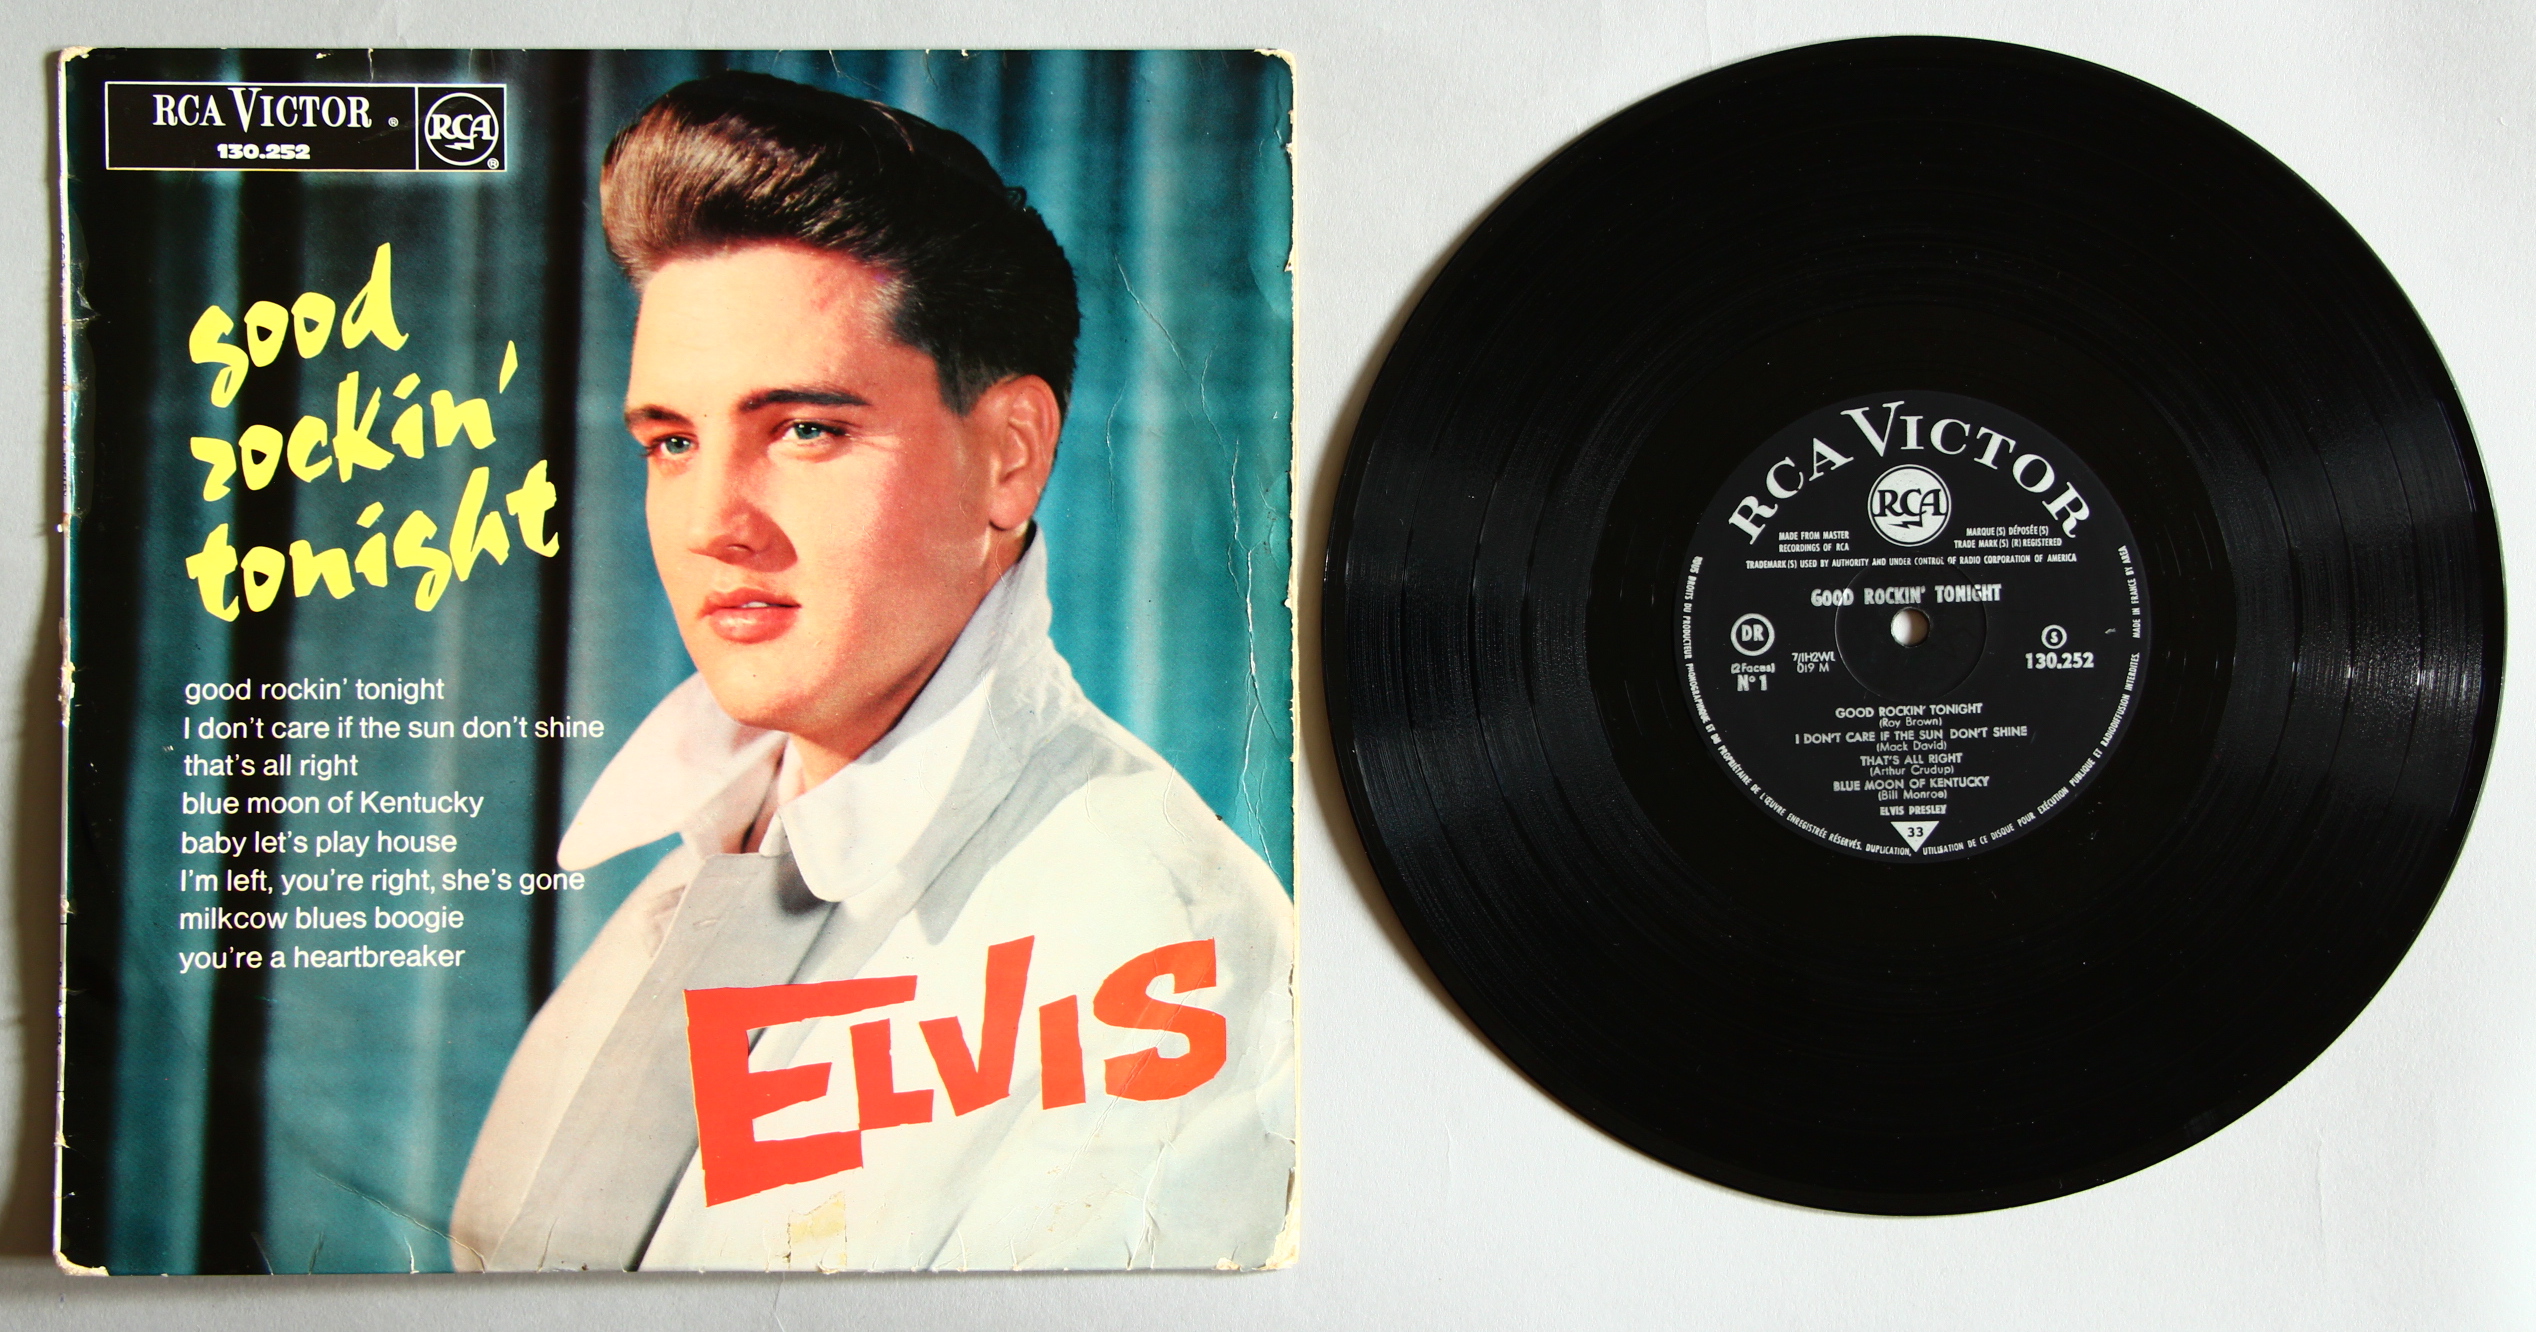 Elvis Presley Rare French 10 inch vinyl record "Good Rockin Tonight" original pressing 130.252.